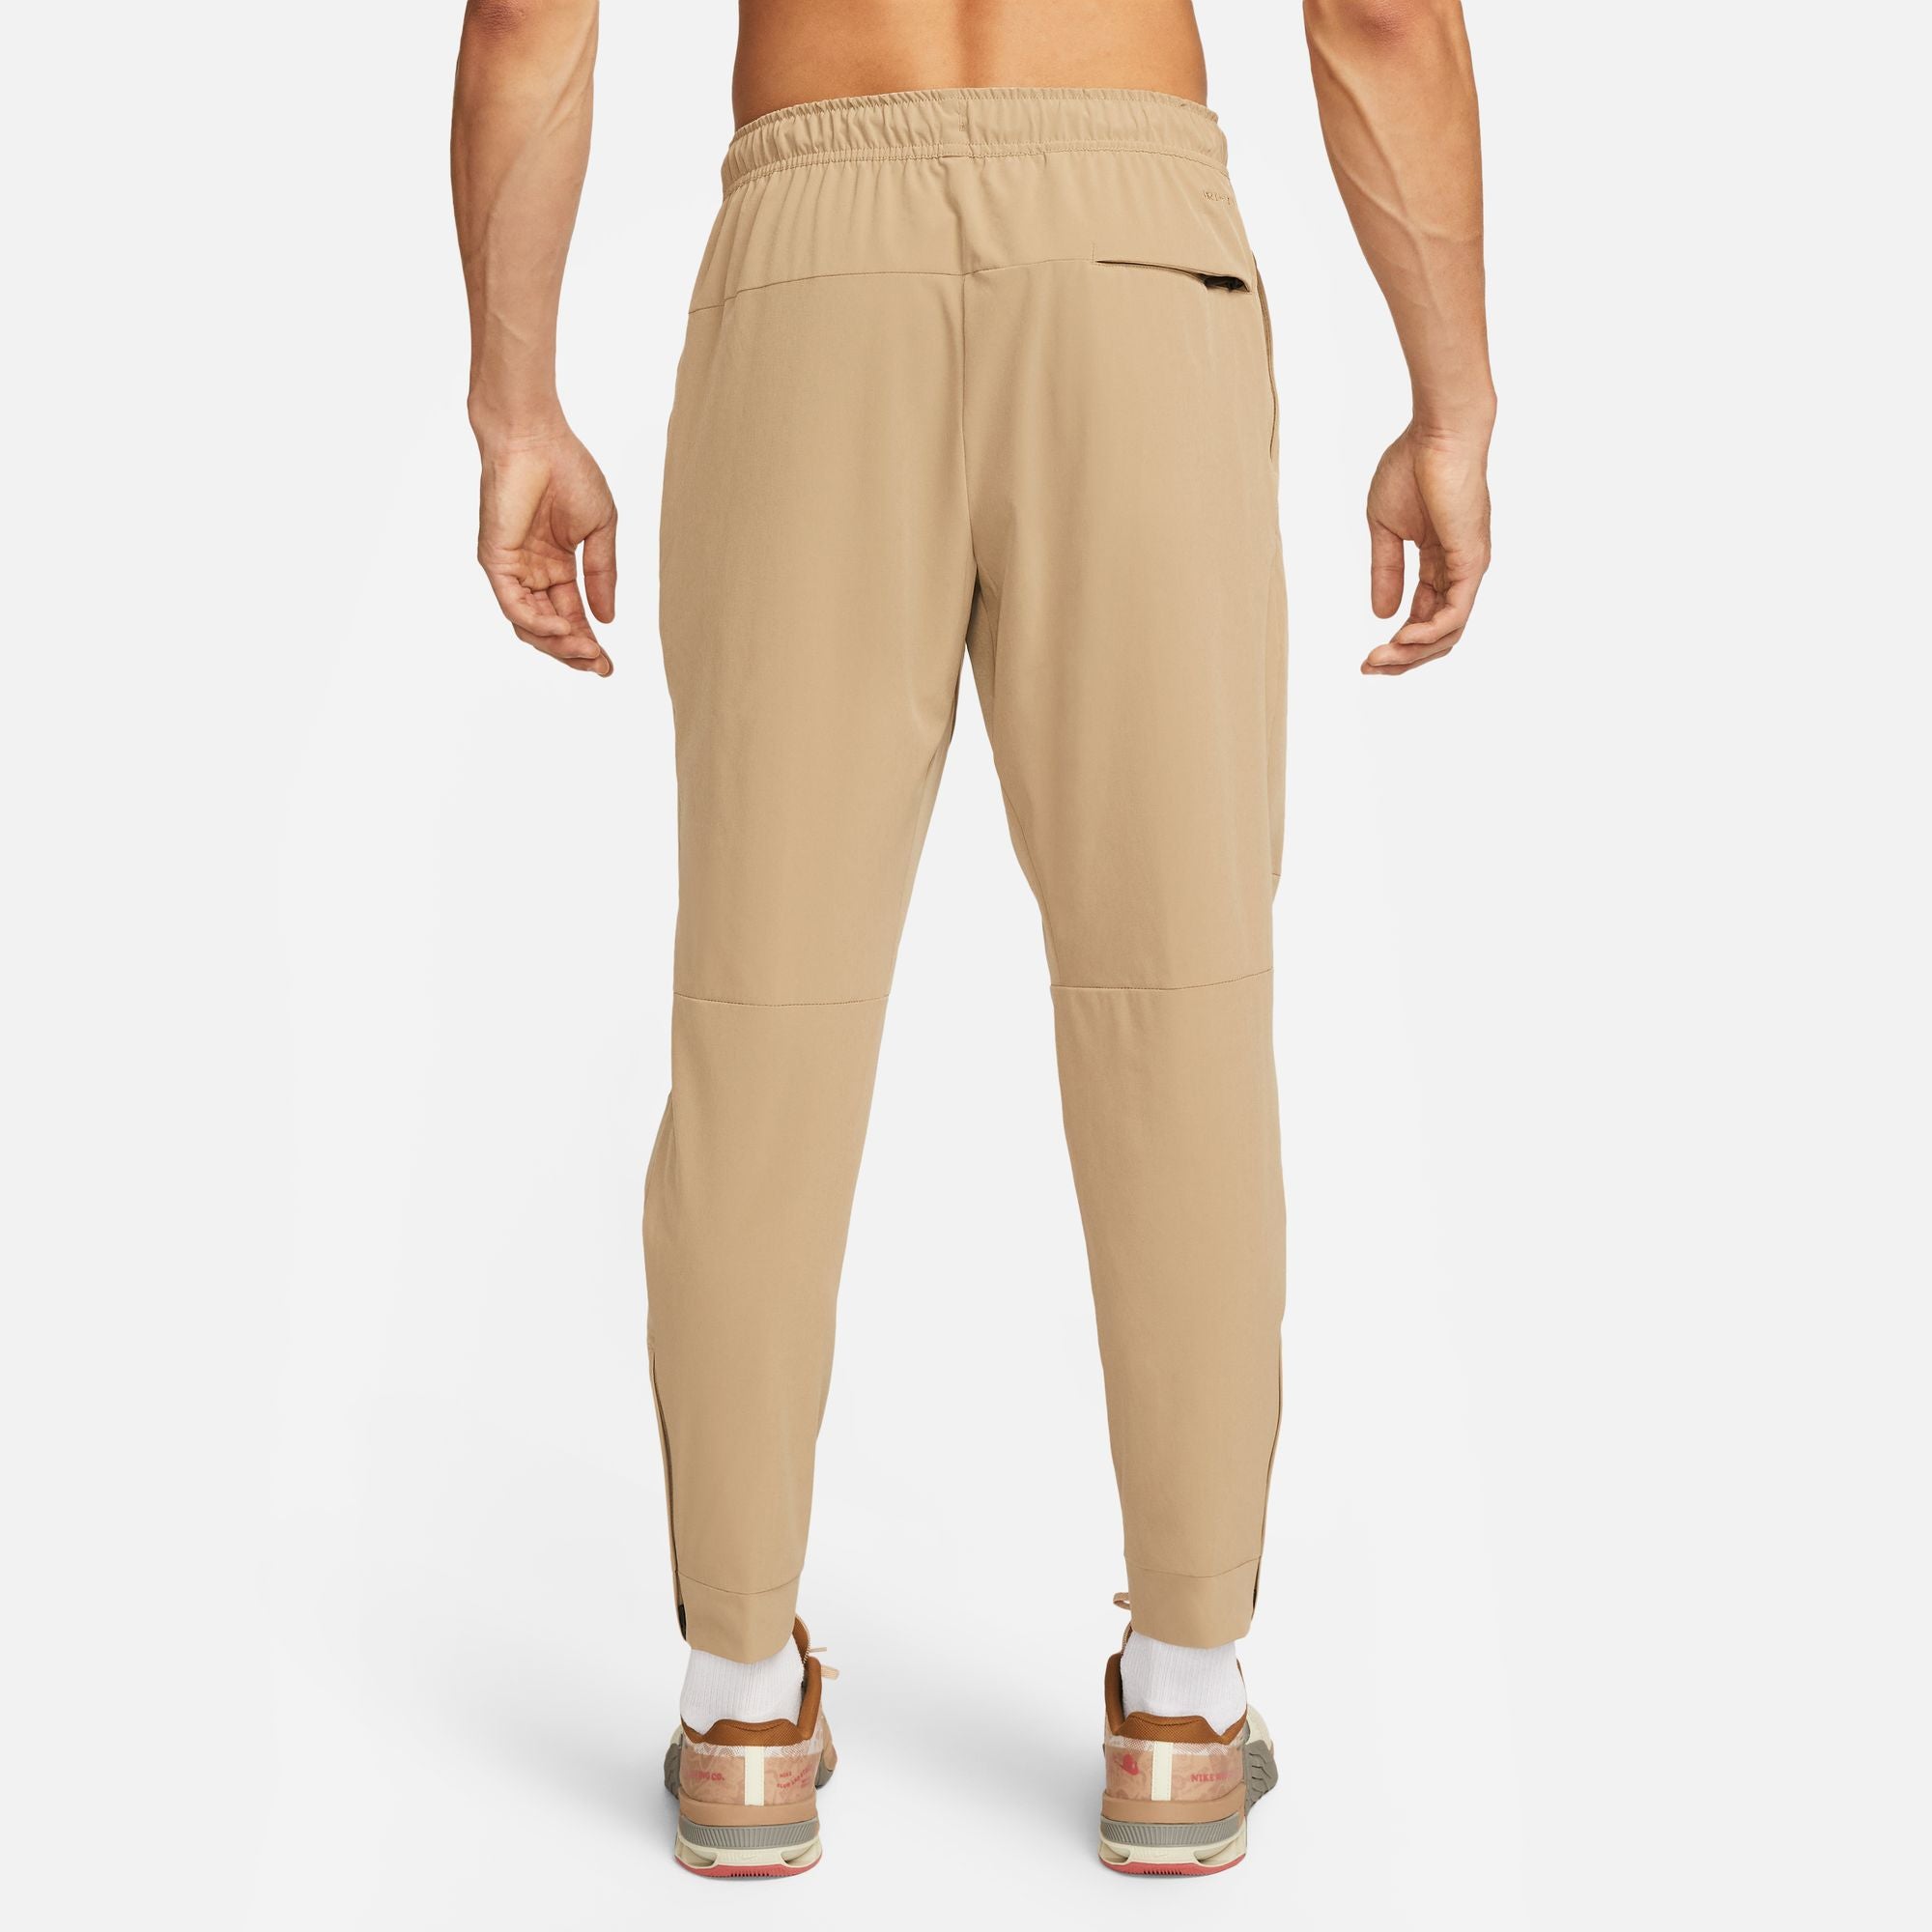 Pantalon jogging Nike Unlimited - Beige